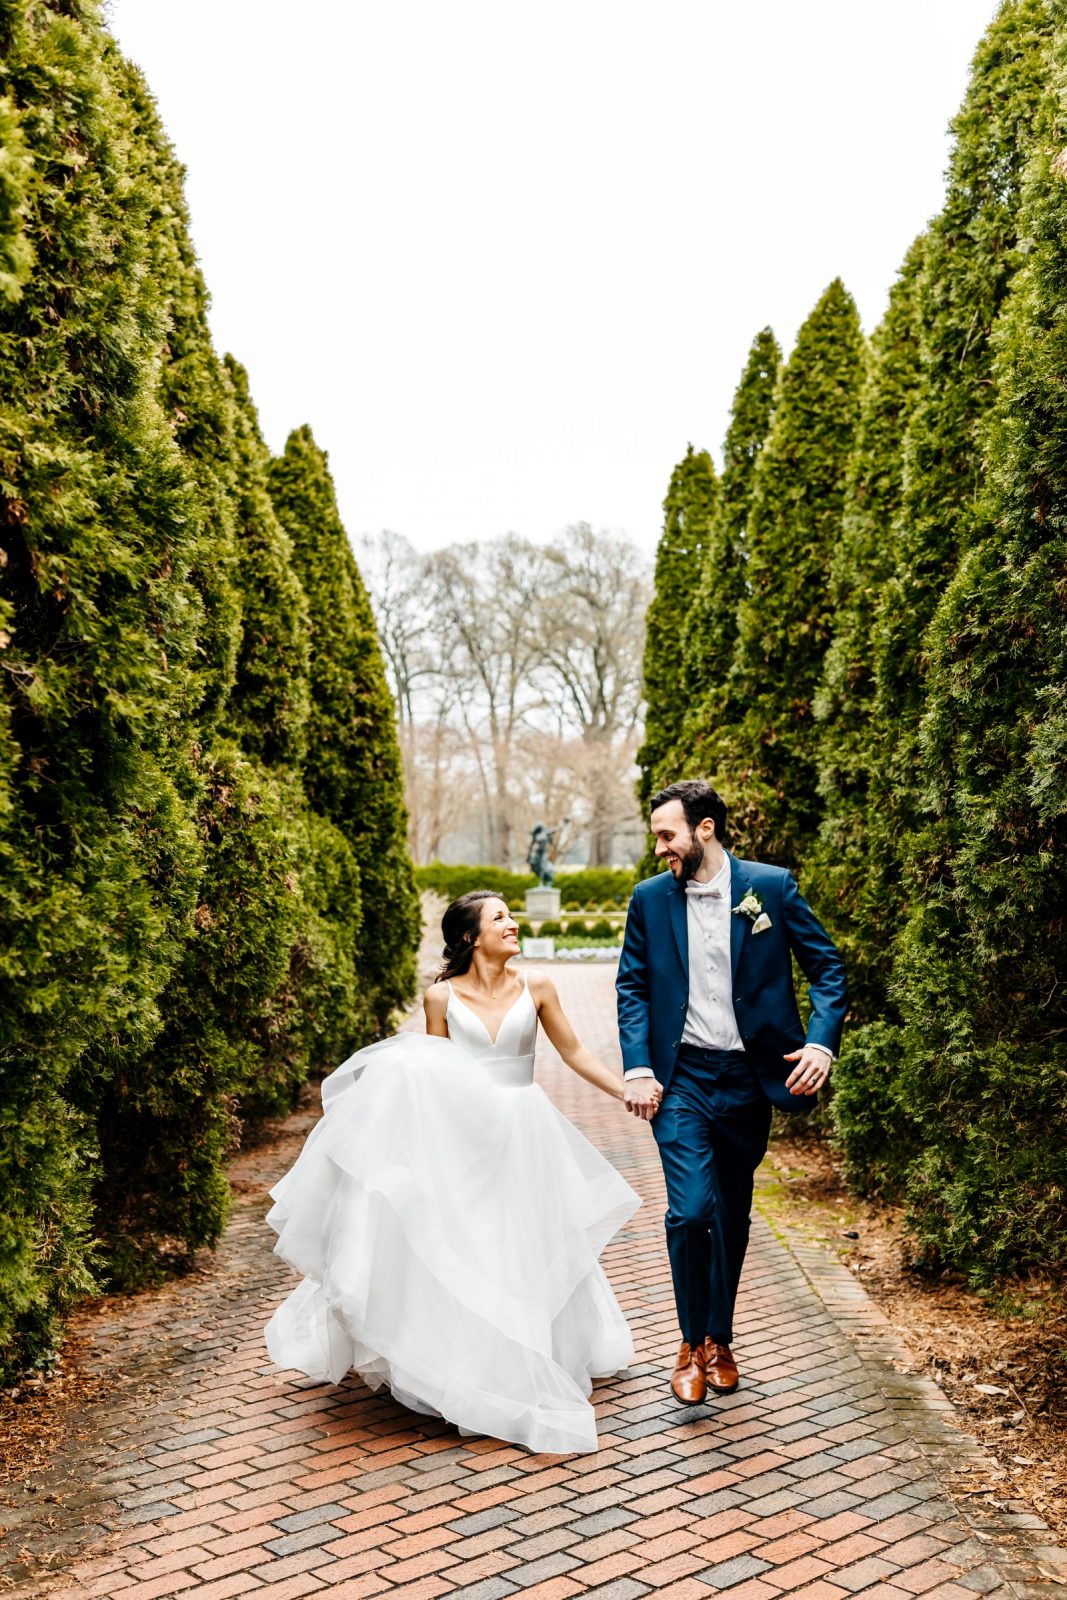 Memphis wedding photographer captures bride and groom running through Memphis Botanic Garden while laughing